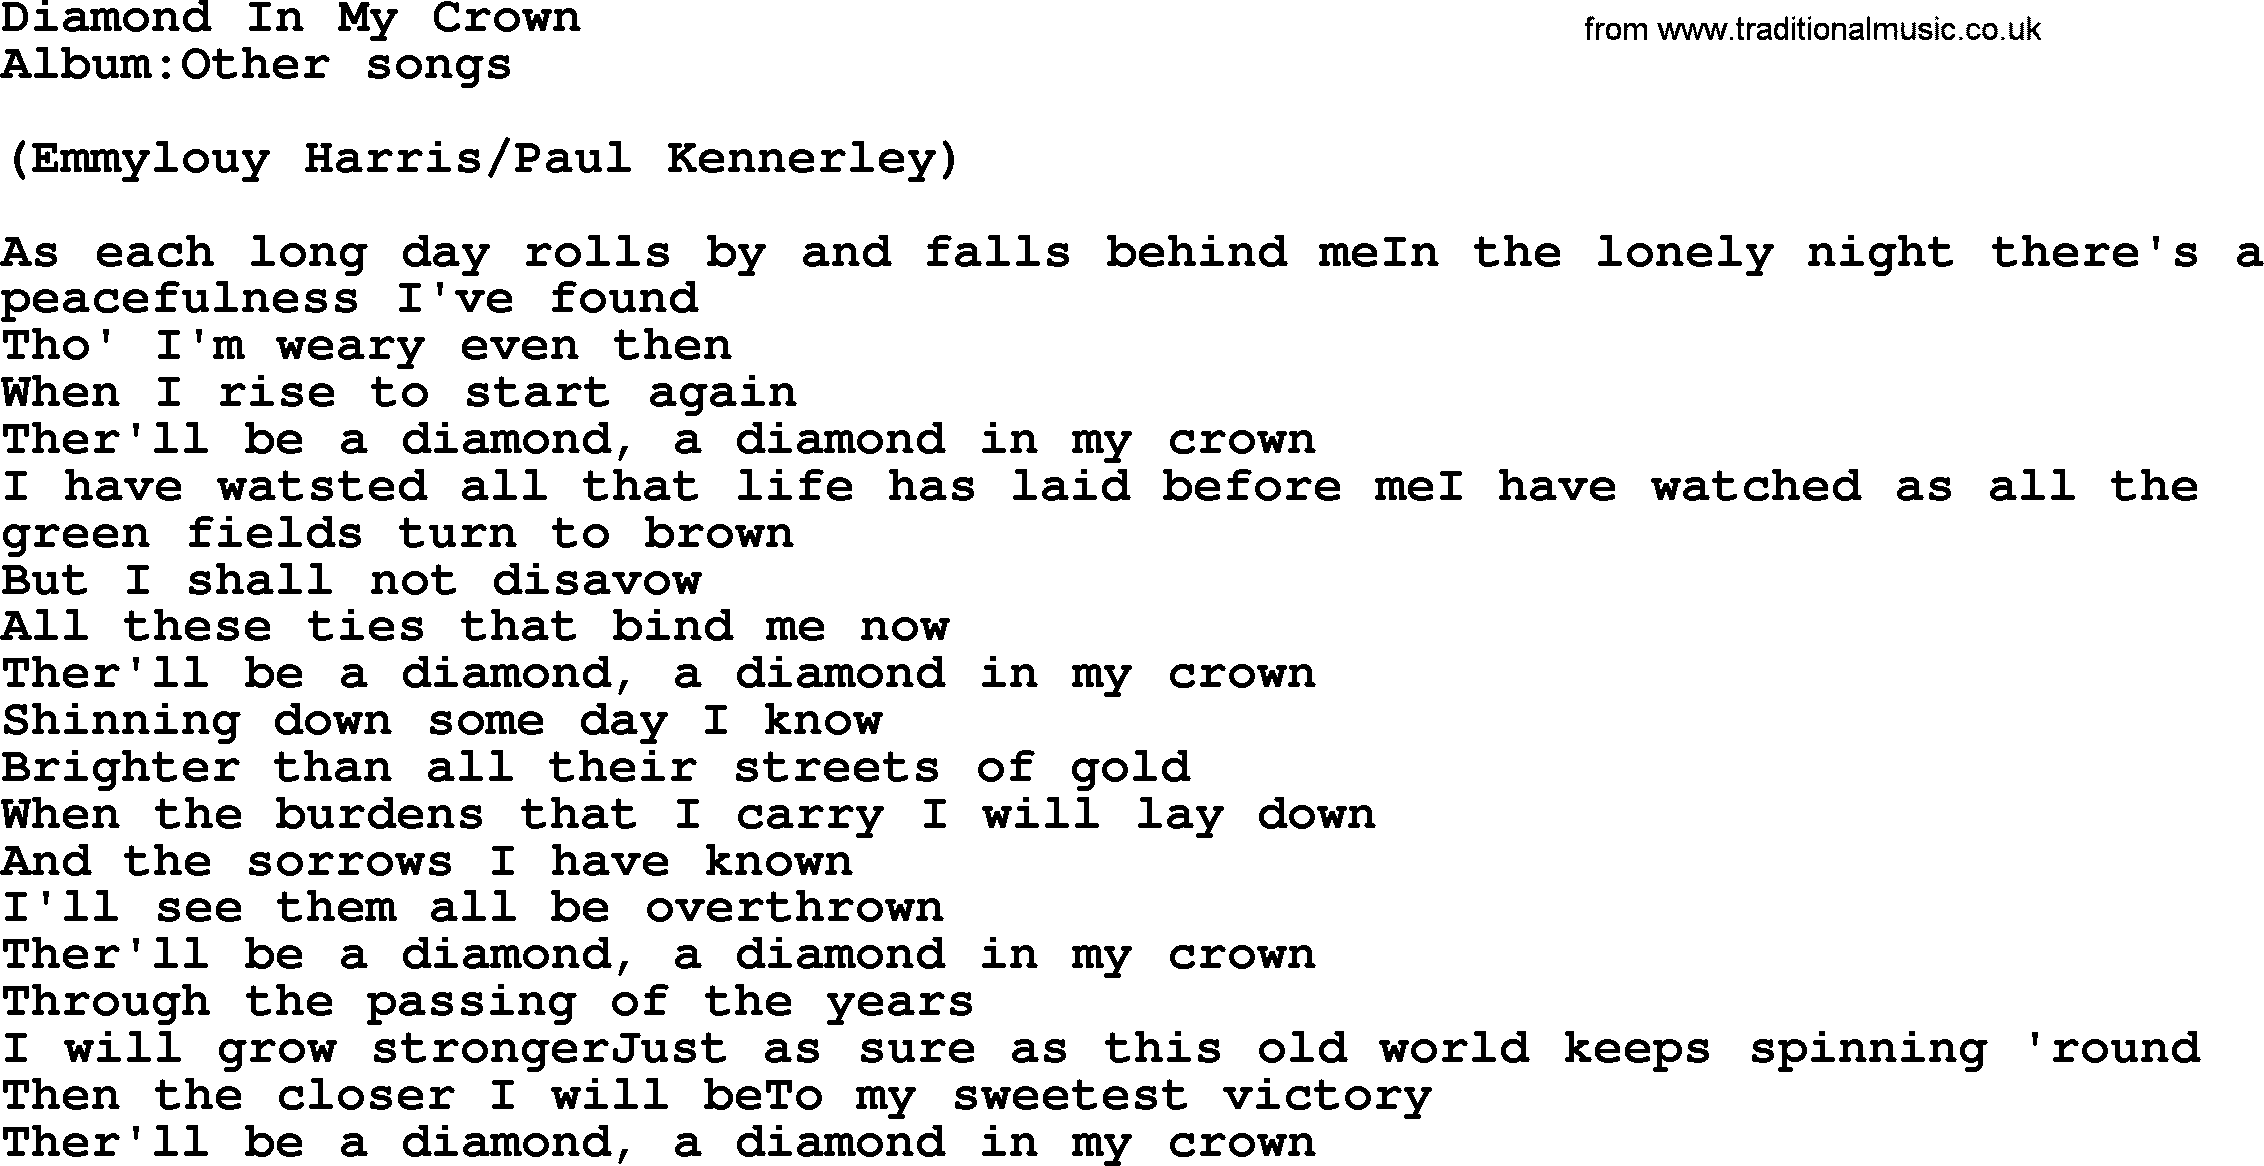 Emmylou Harris song: Diamond In My Crown lyrics